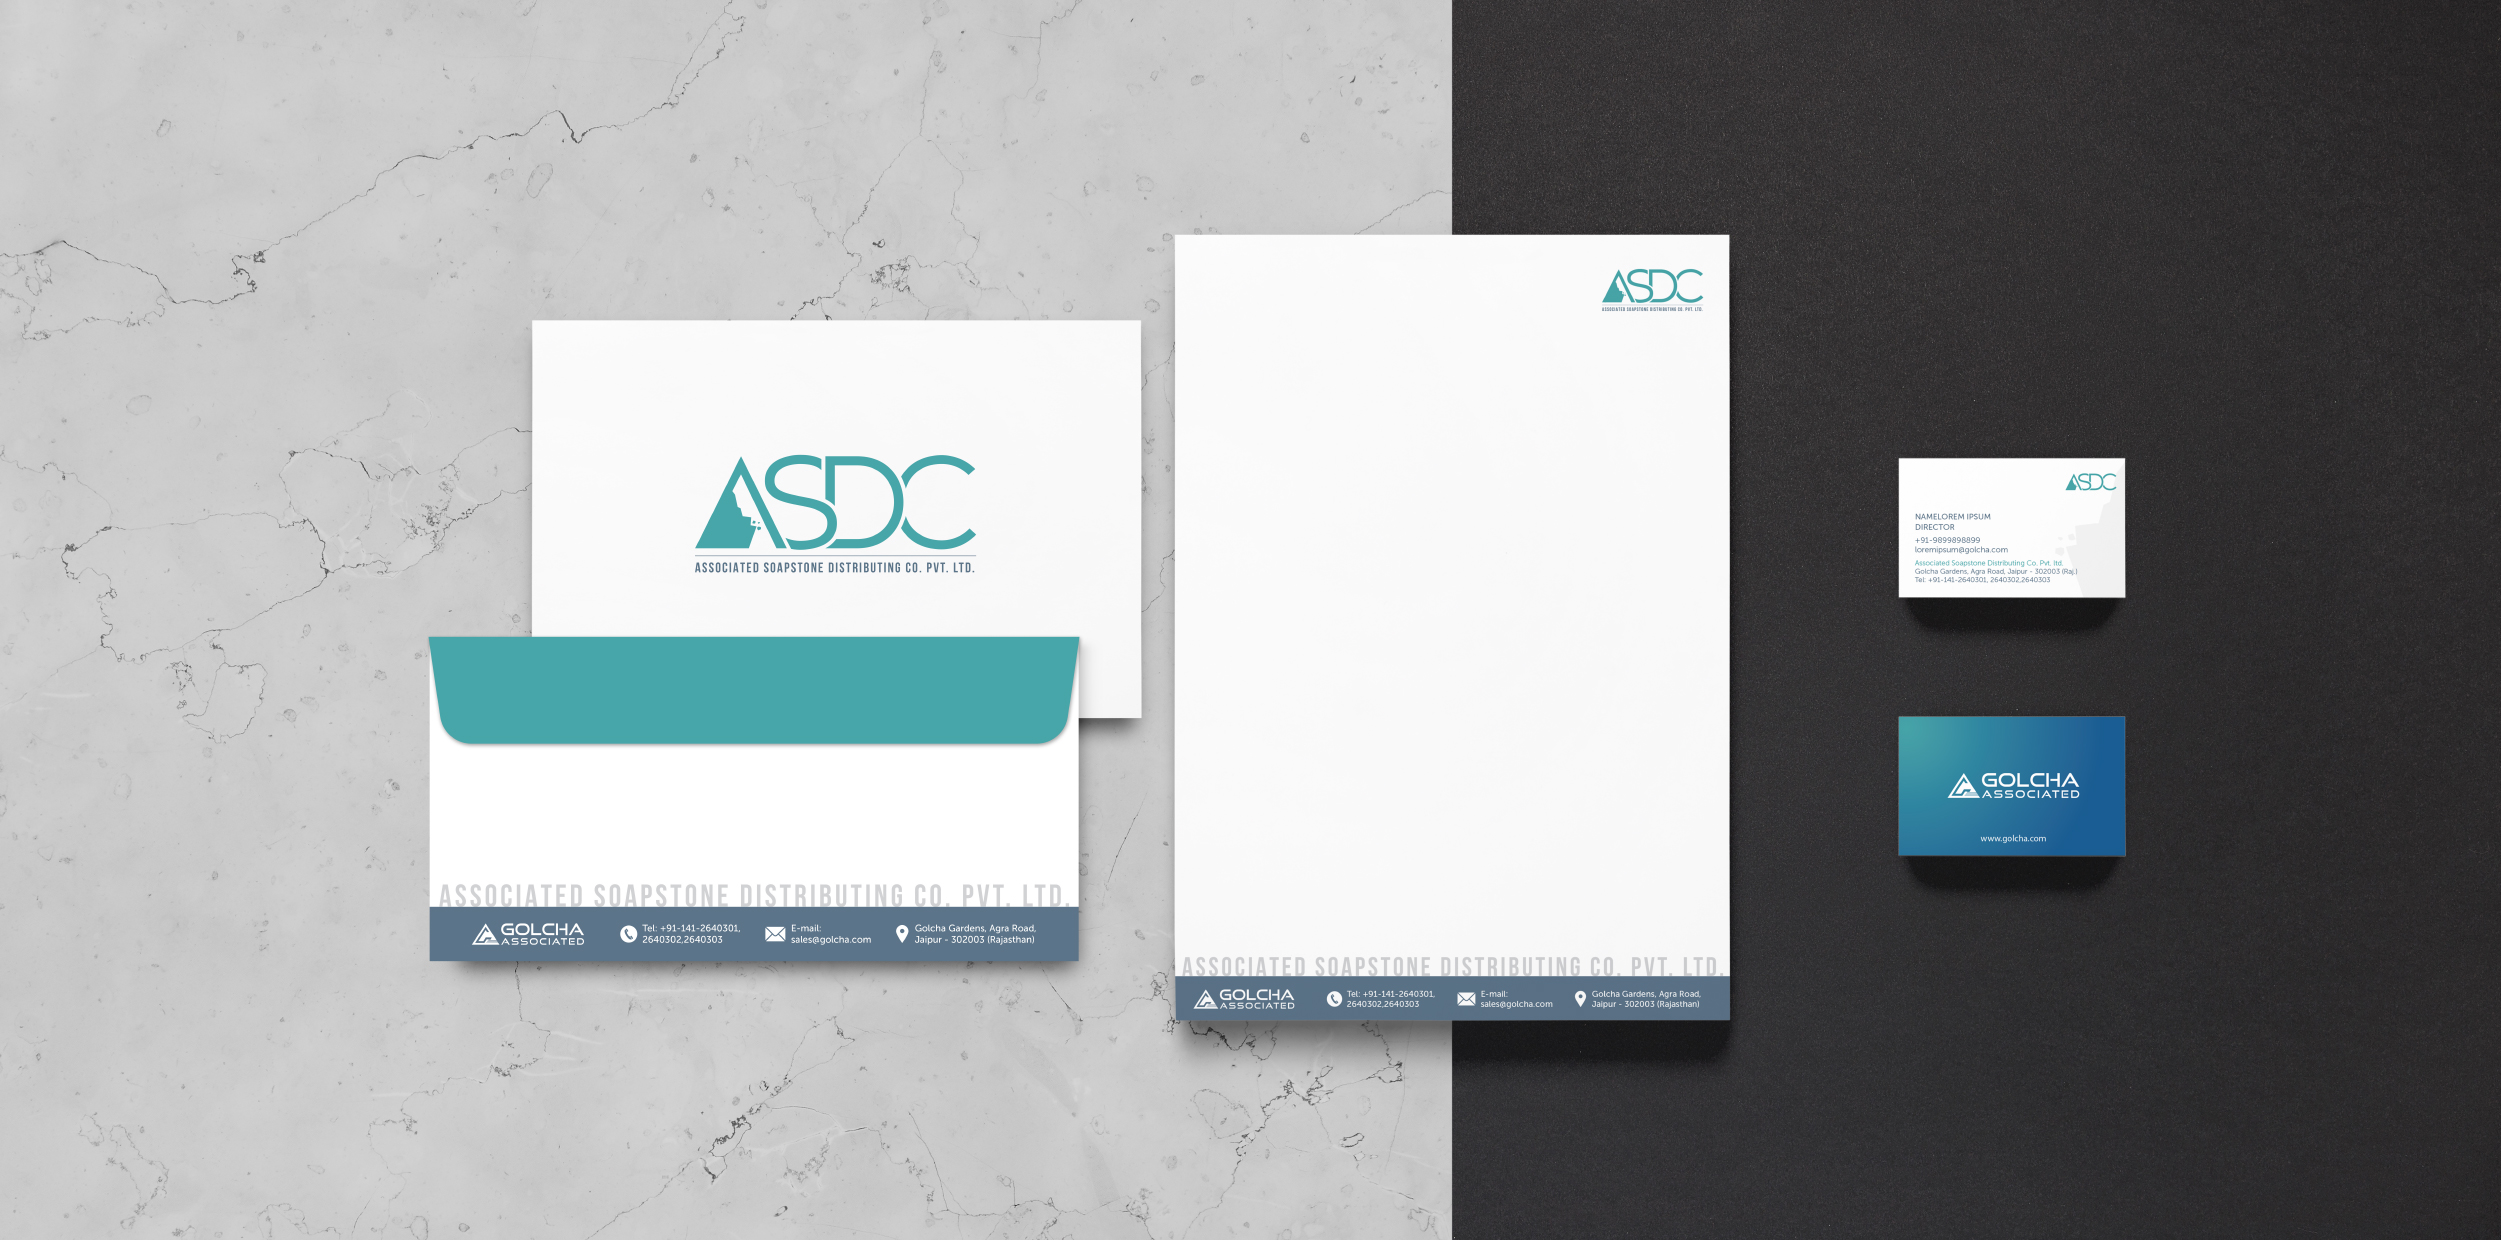 ASDC (Associated soapstone distributing co.pvt.ltd)